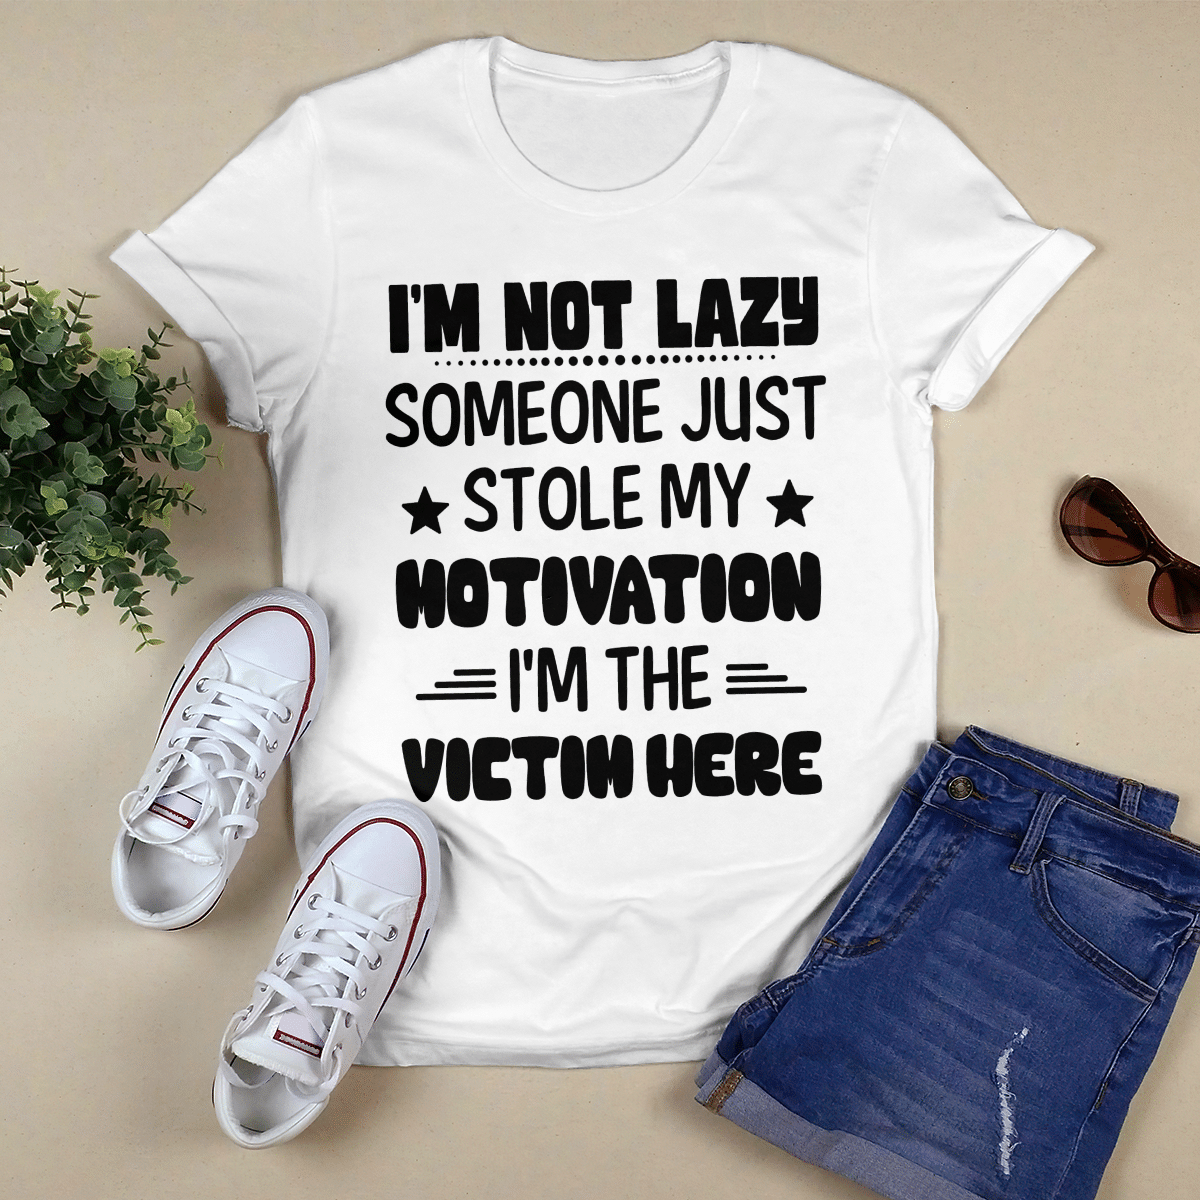 I_m Not Lazy shirt